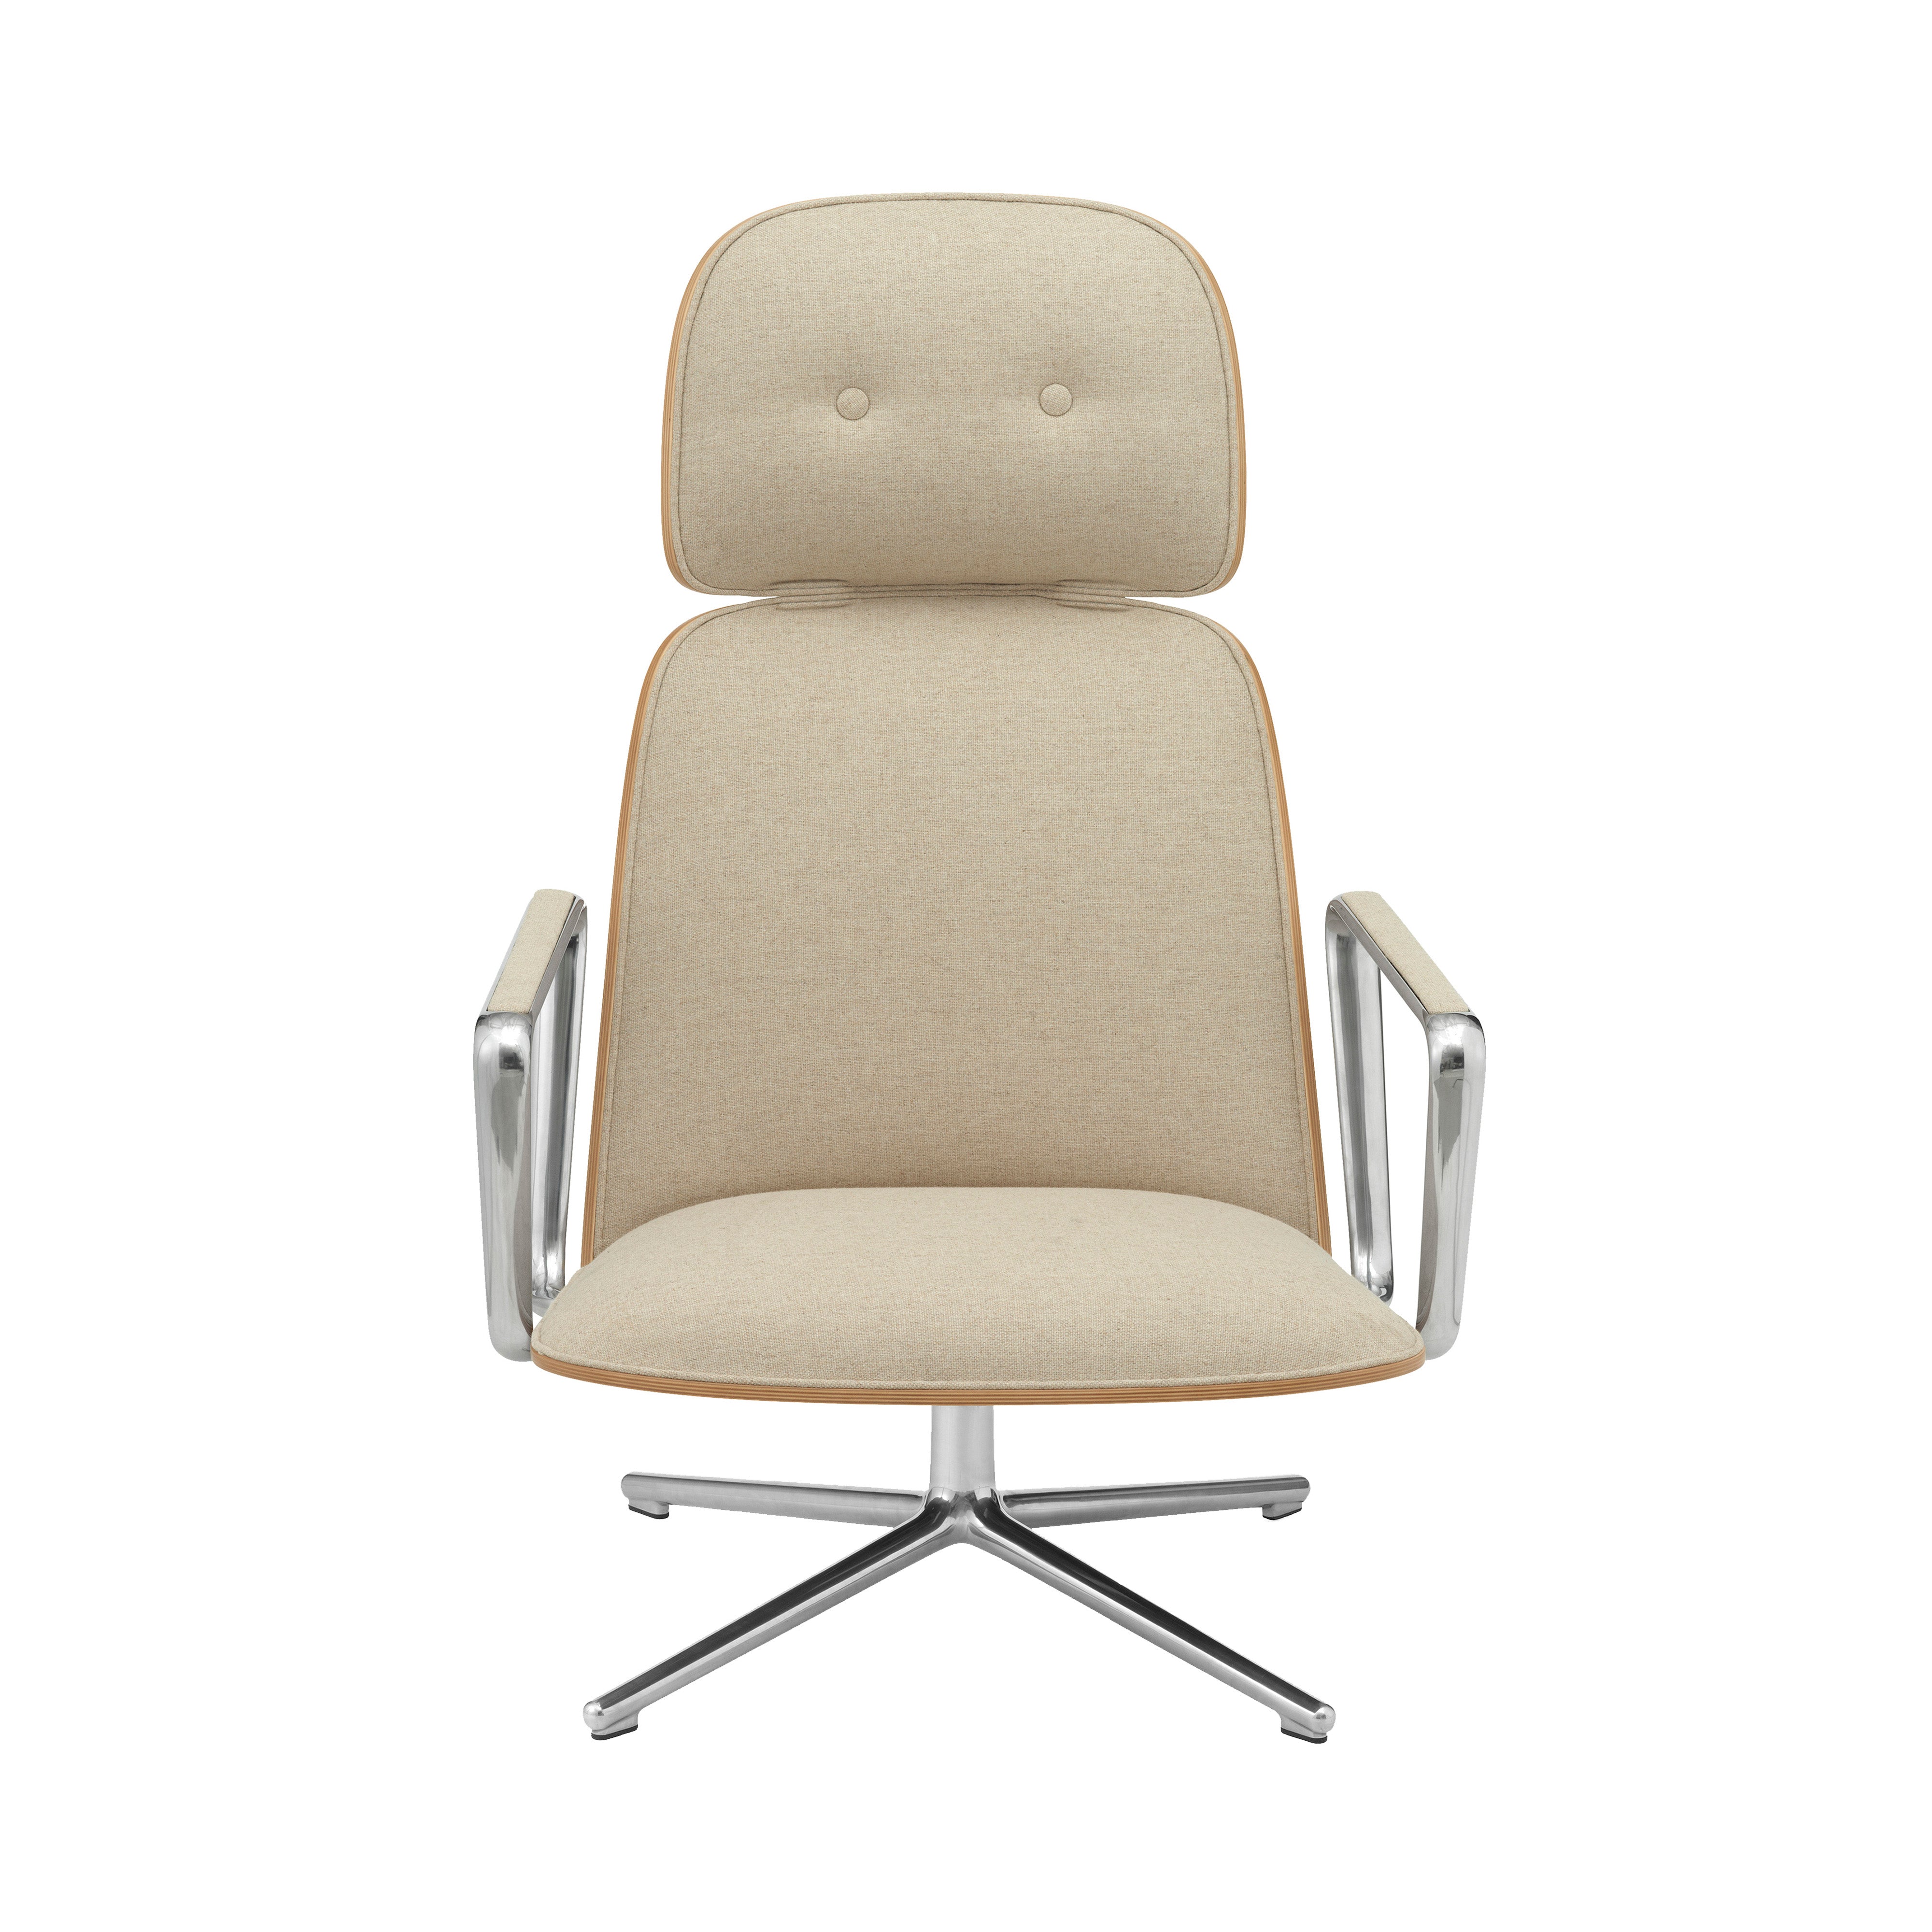 Pad Lounge Chair High Swivel: Aluminum + Oak + Without Tilt